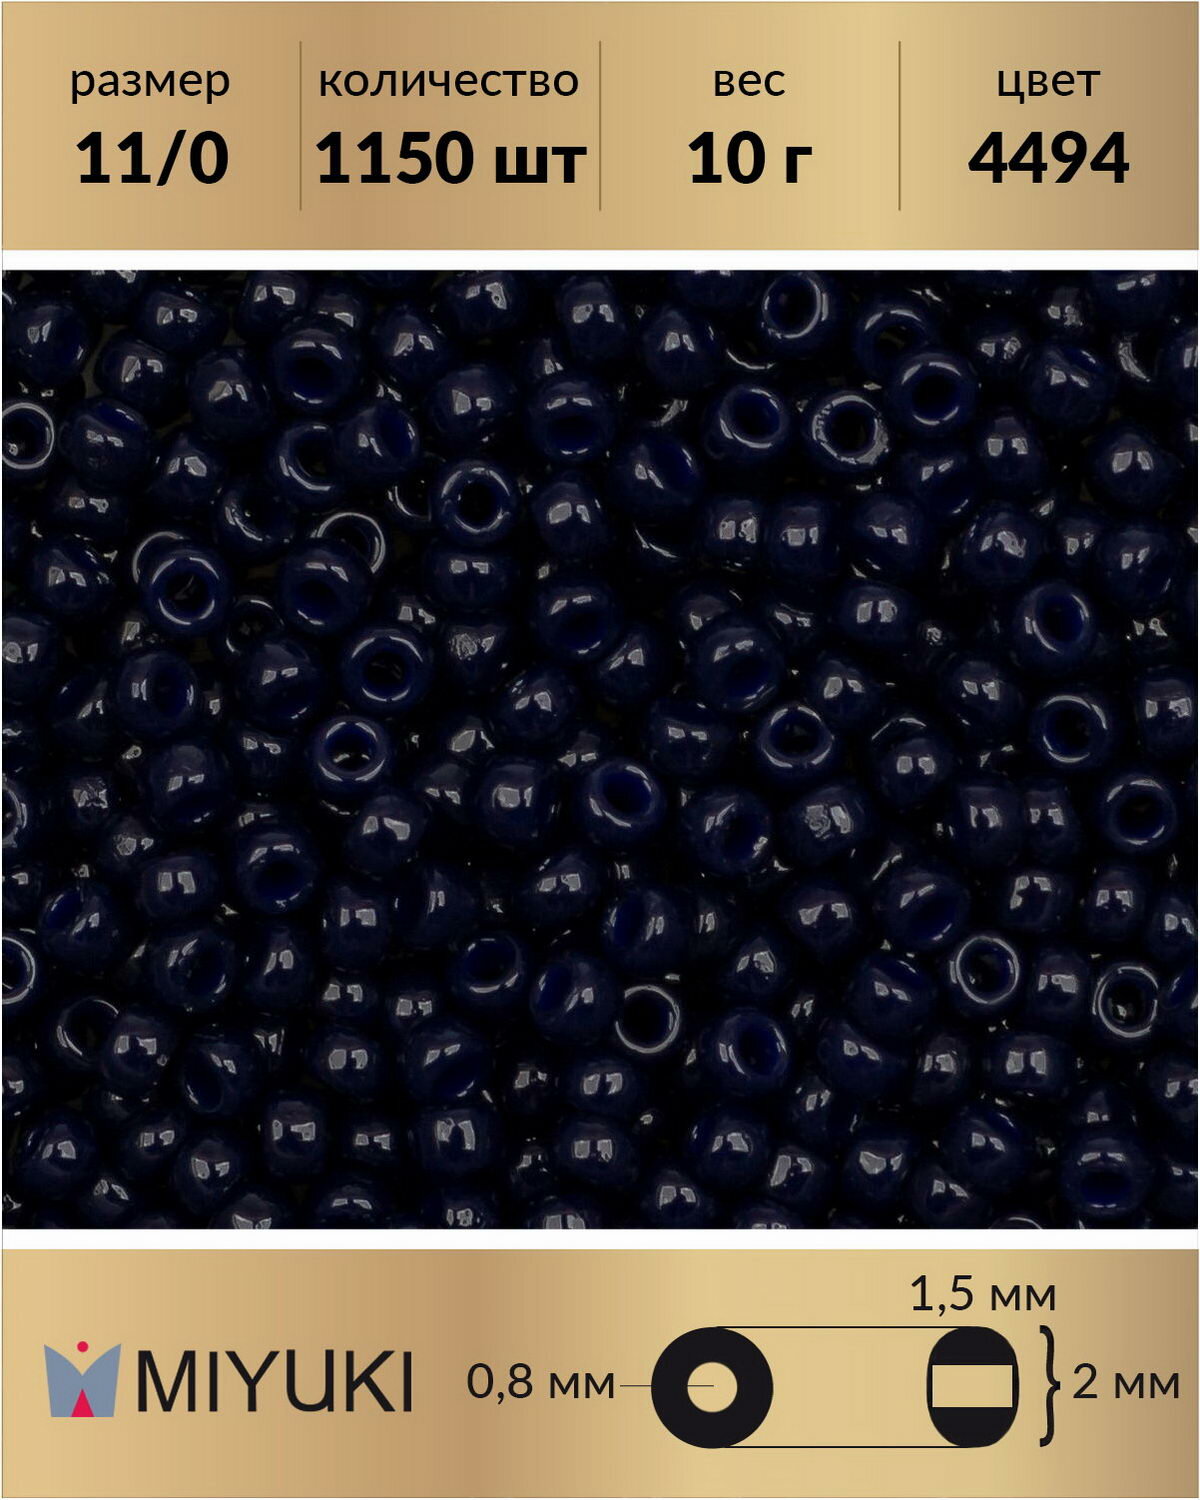 Бисер Miyuki, размер 11/0, цвет: Duracoat непрозрачный темно-синий (4494). Цена указана за 10 грамм.